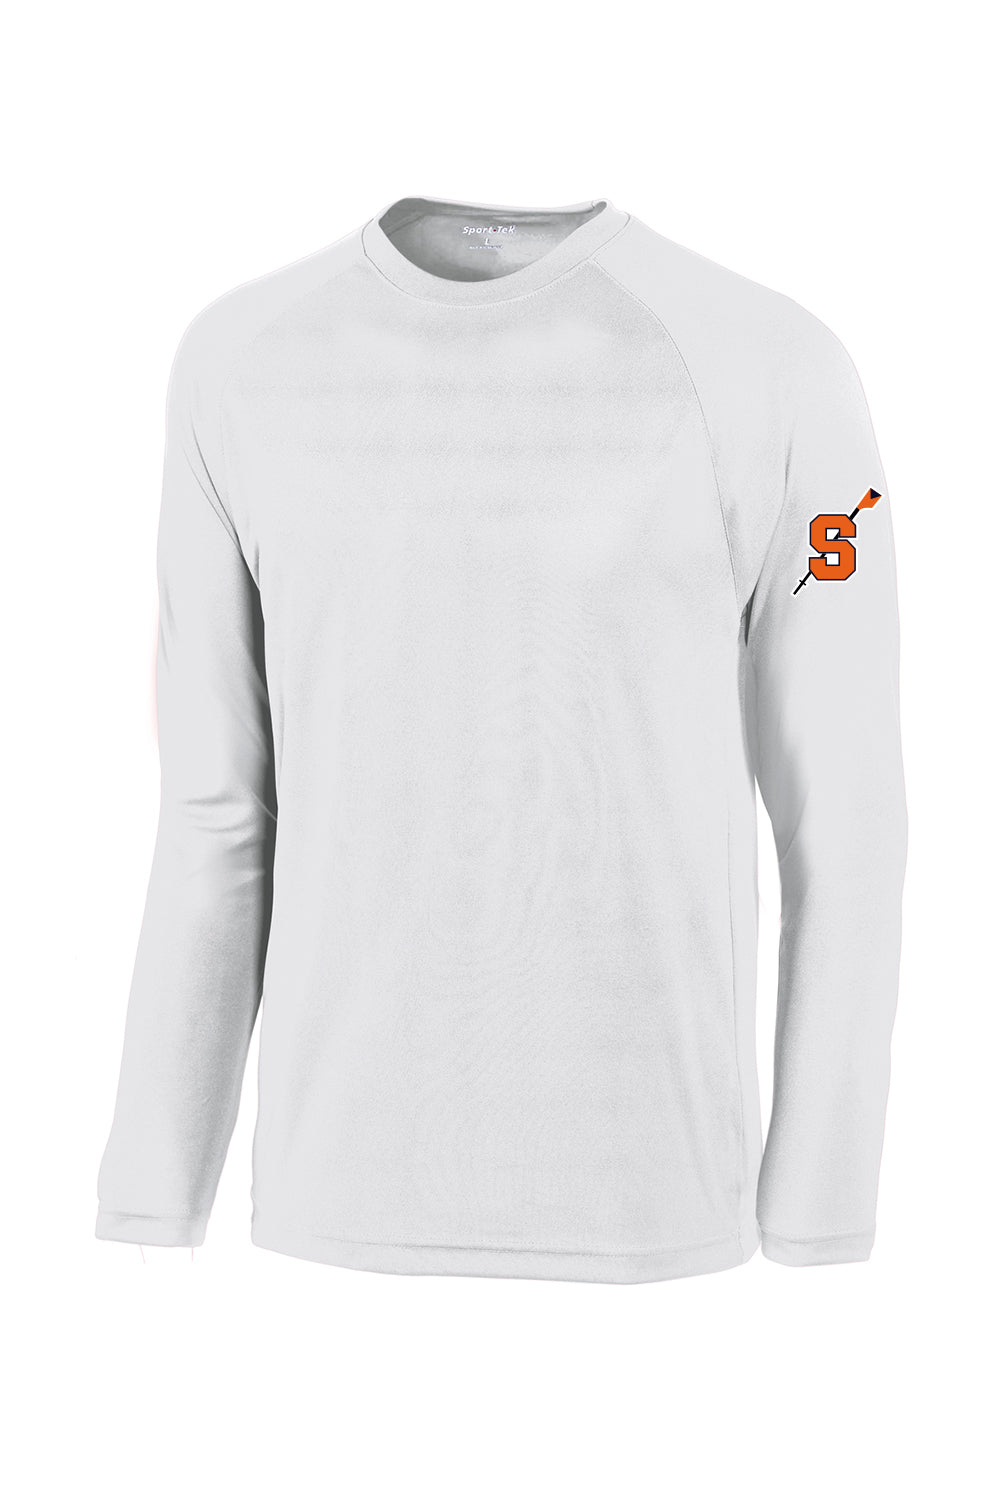 Long Sleeve Syracuse Alumni Warm-Up Shirt